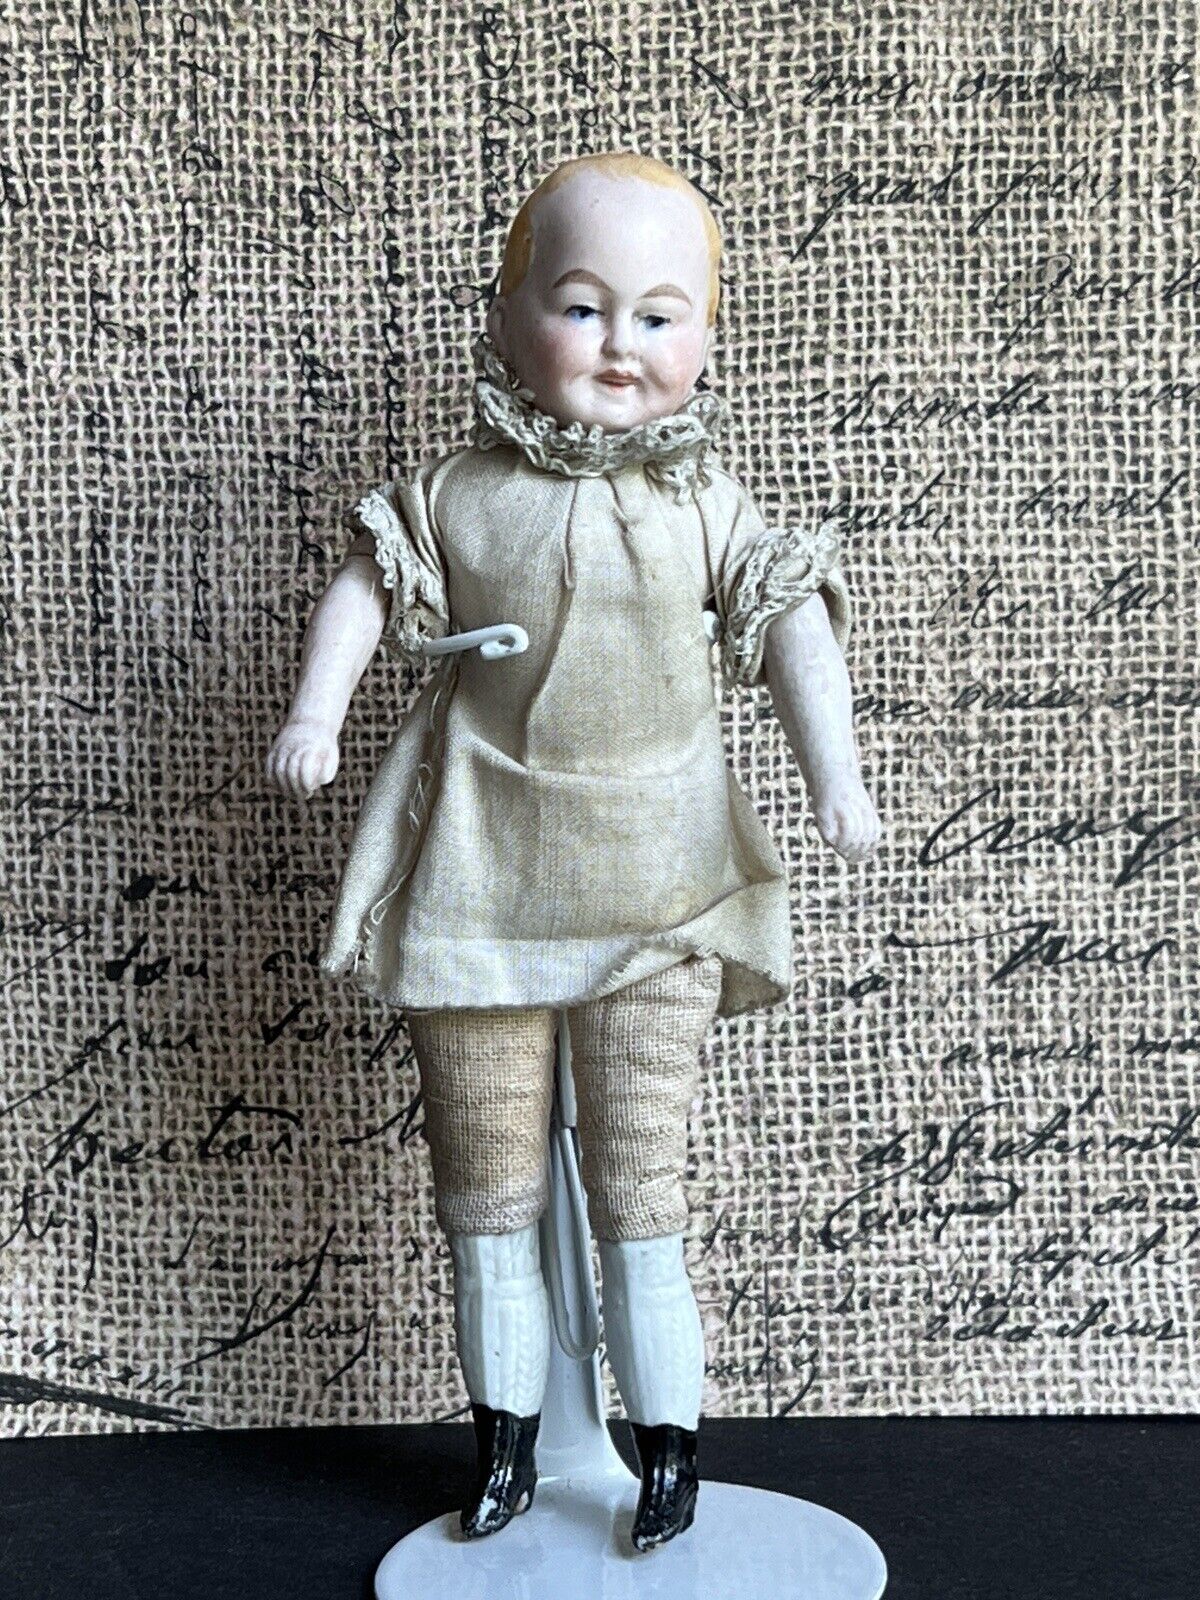 Rare Antique German 4.75” Bisque Shoulder Head Dollhouse Bald Man Doll